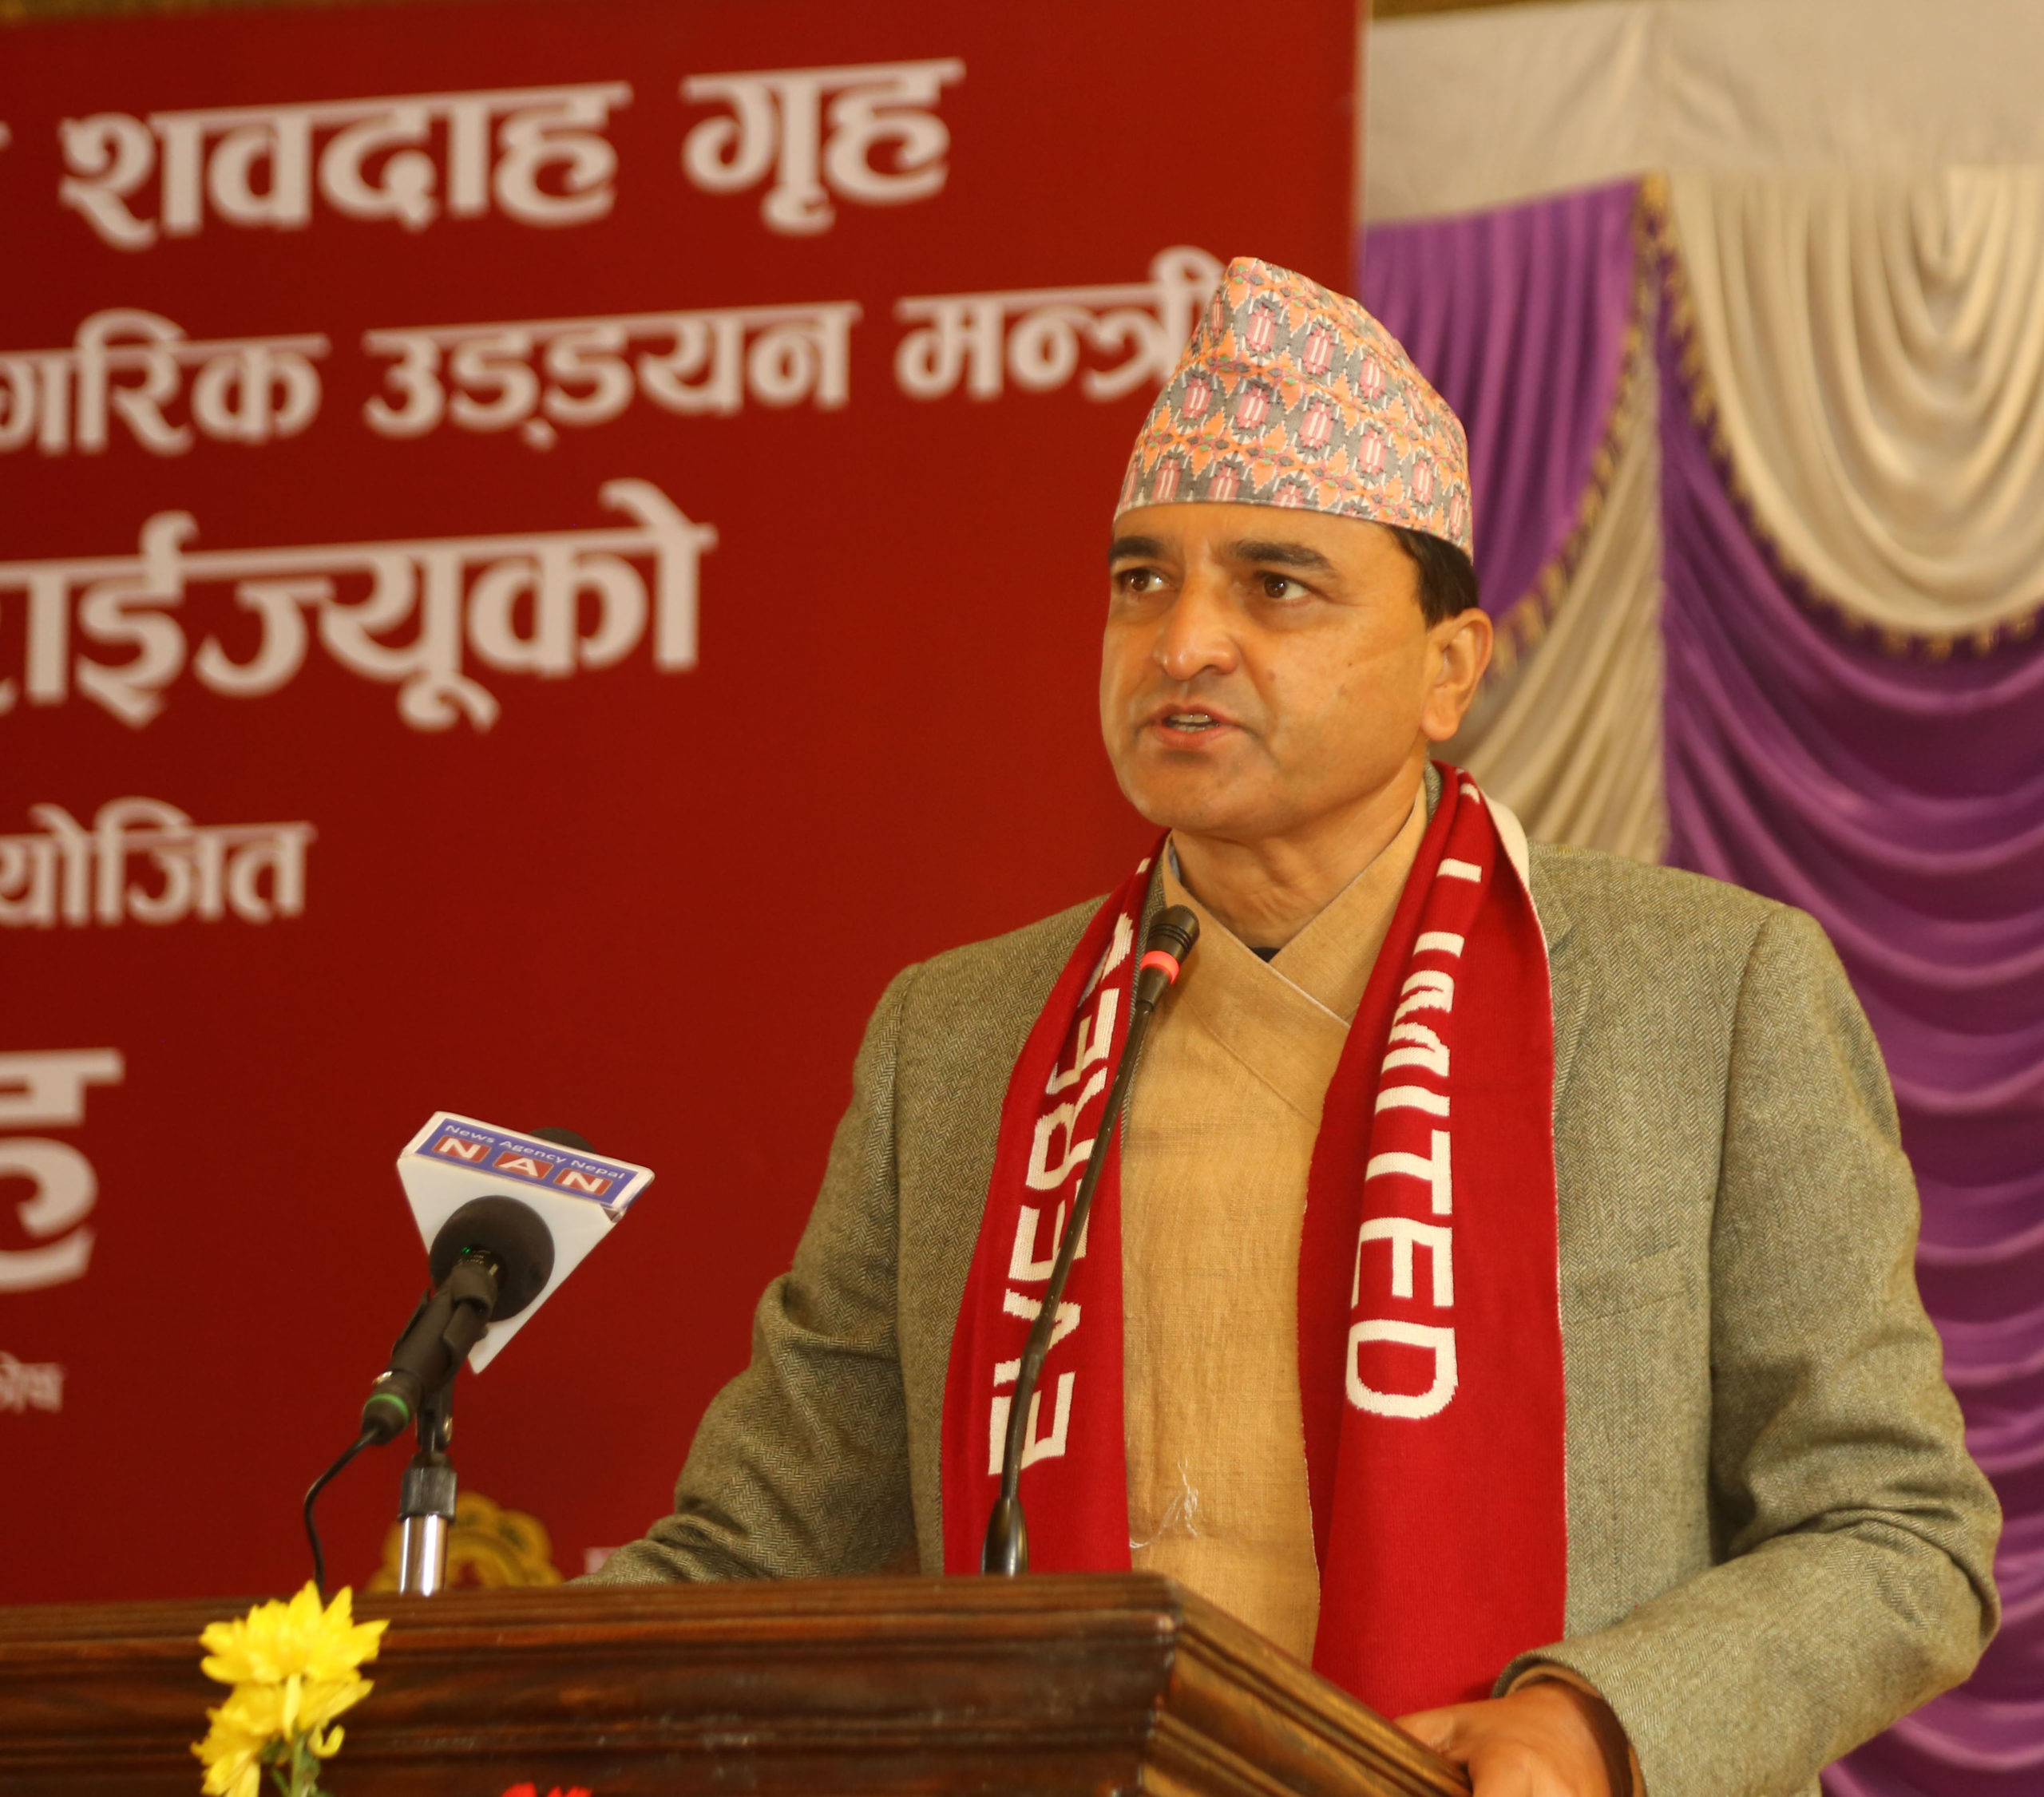 PM Oli following footsteps of former king Gyanendra: NCP leader Bhattarai